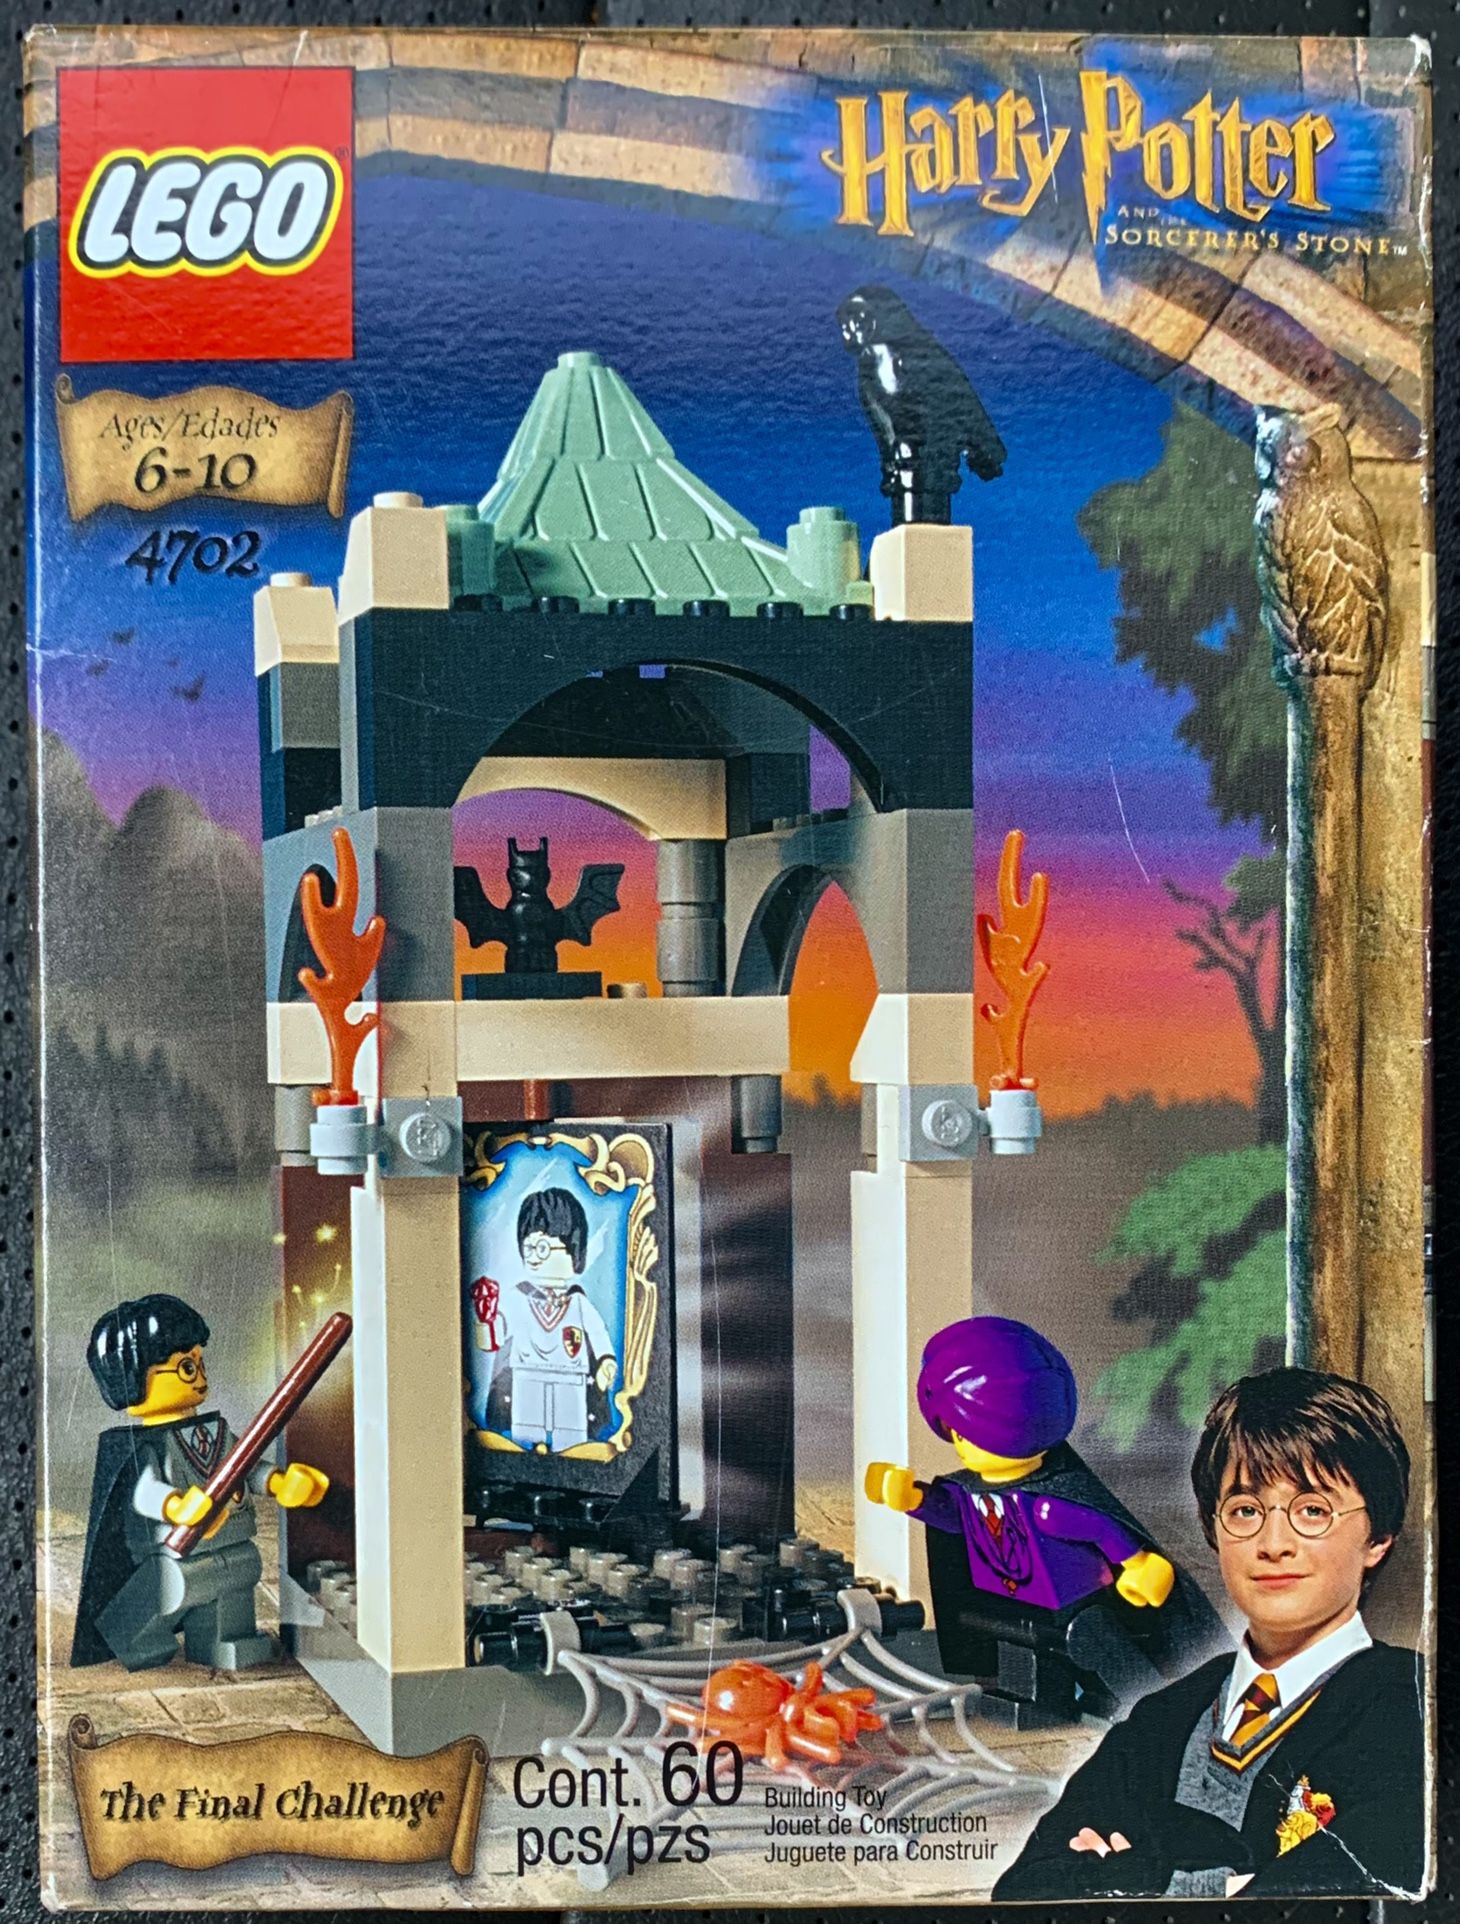 Lego Harry Potter Set# 4702 RETIRED